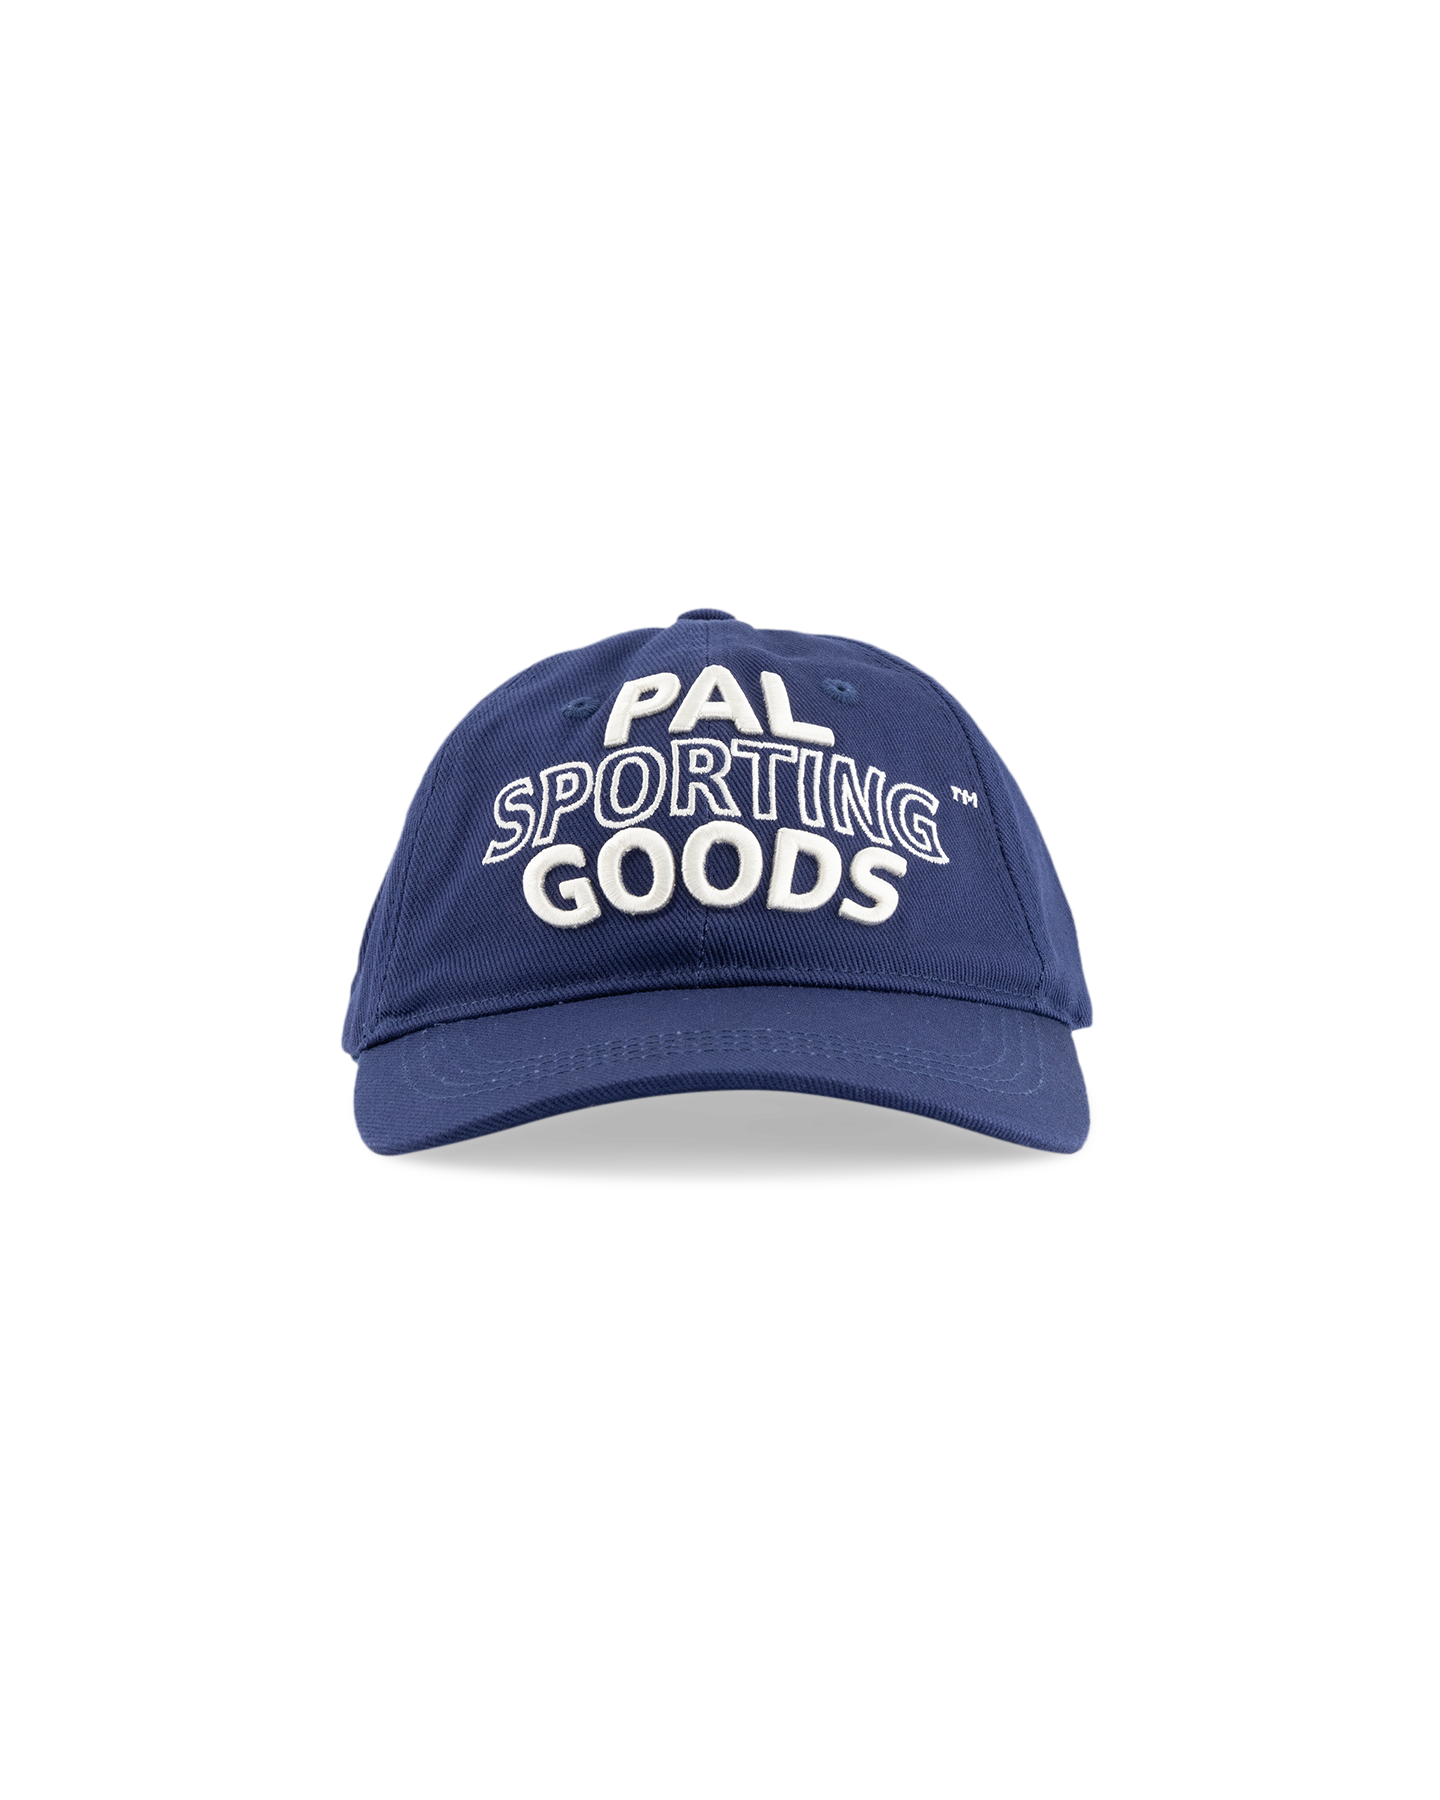 PAL Sporting Goods Trademark Cap NAVY 2